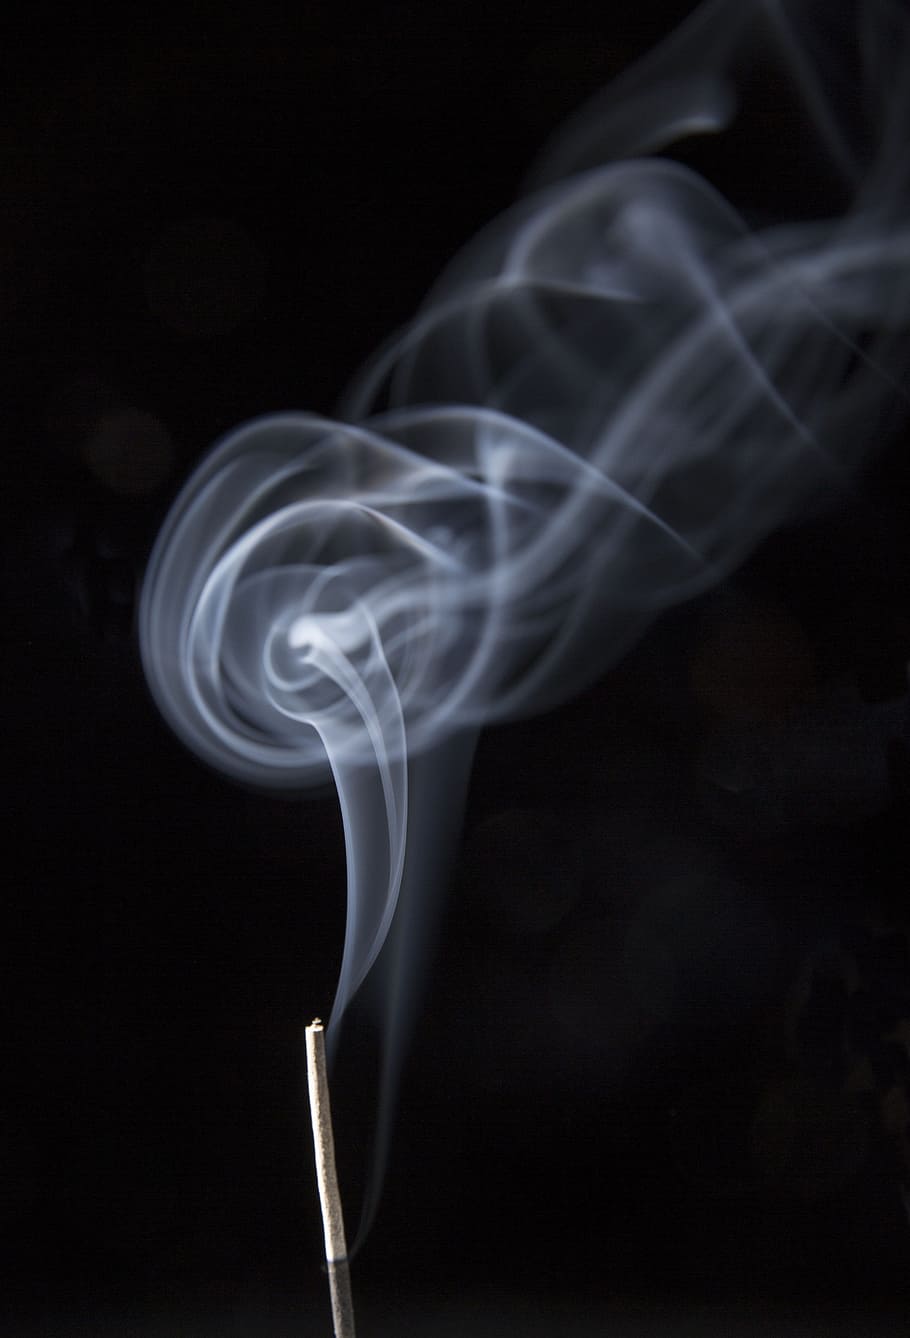 Smoke, Black White, Aroma, Relax, white, smoke - physical structure, burning, swirl, fumes, motion